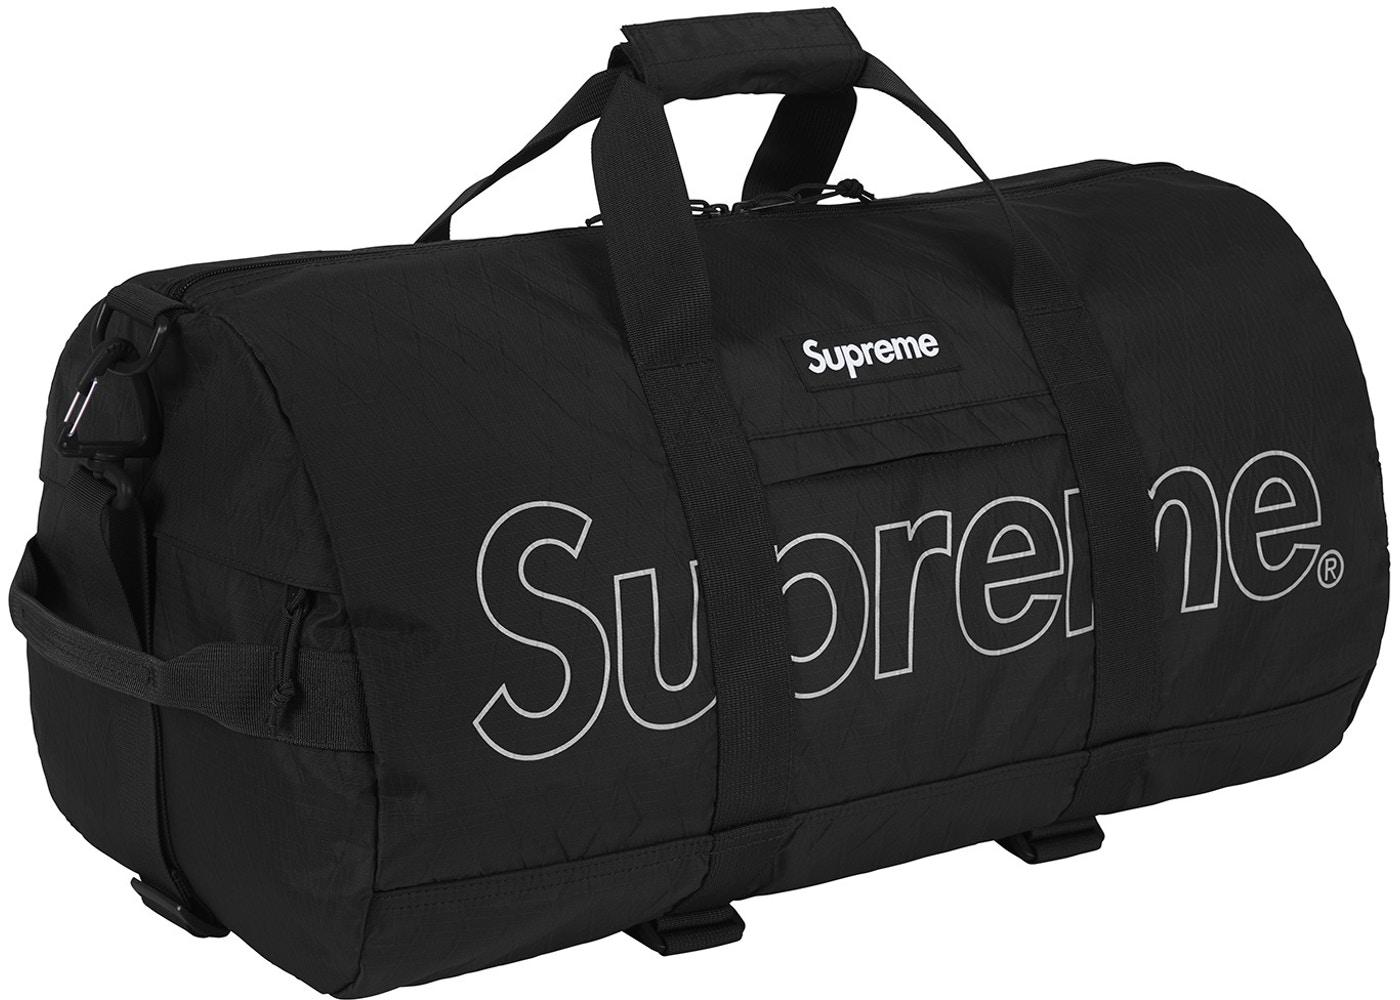 S/S 2018 Supreme cordura fabric duffle bag